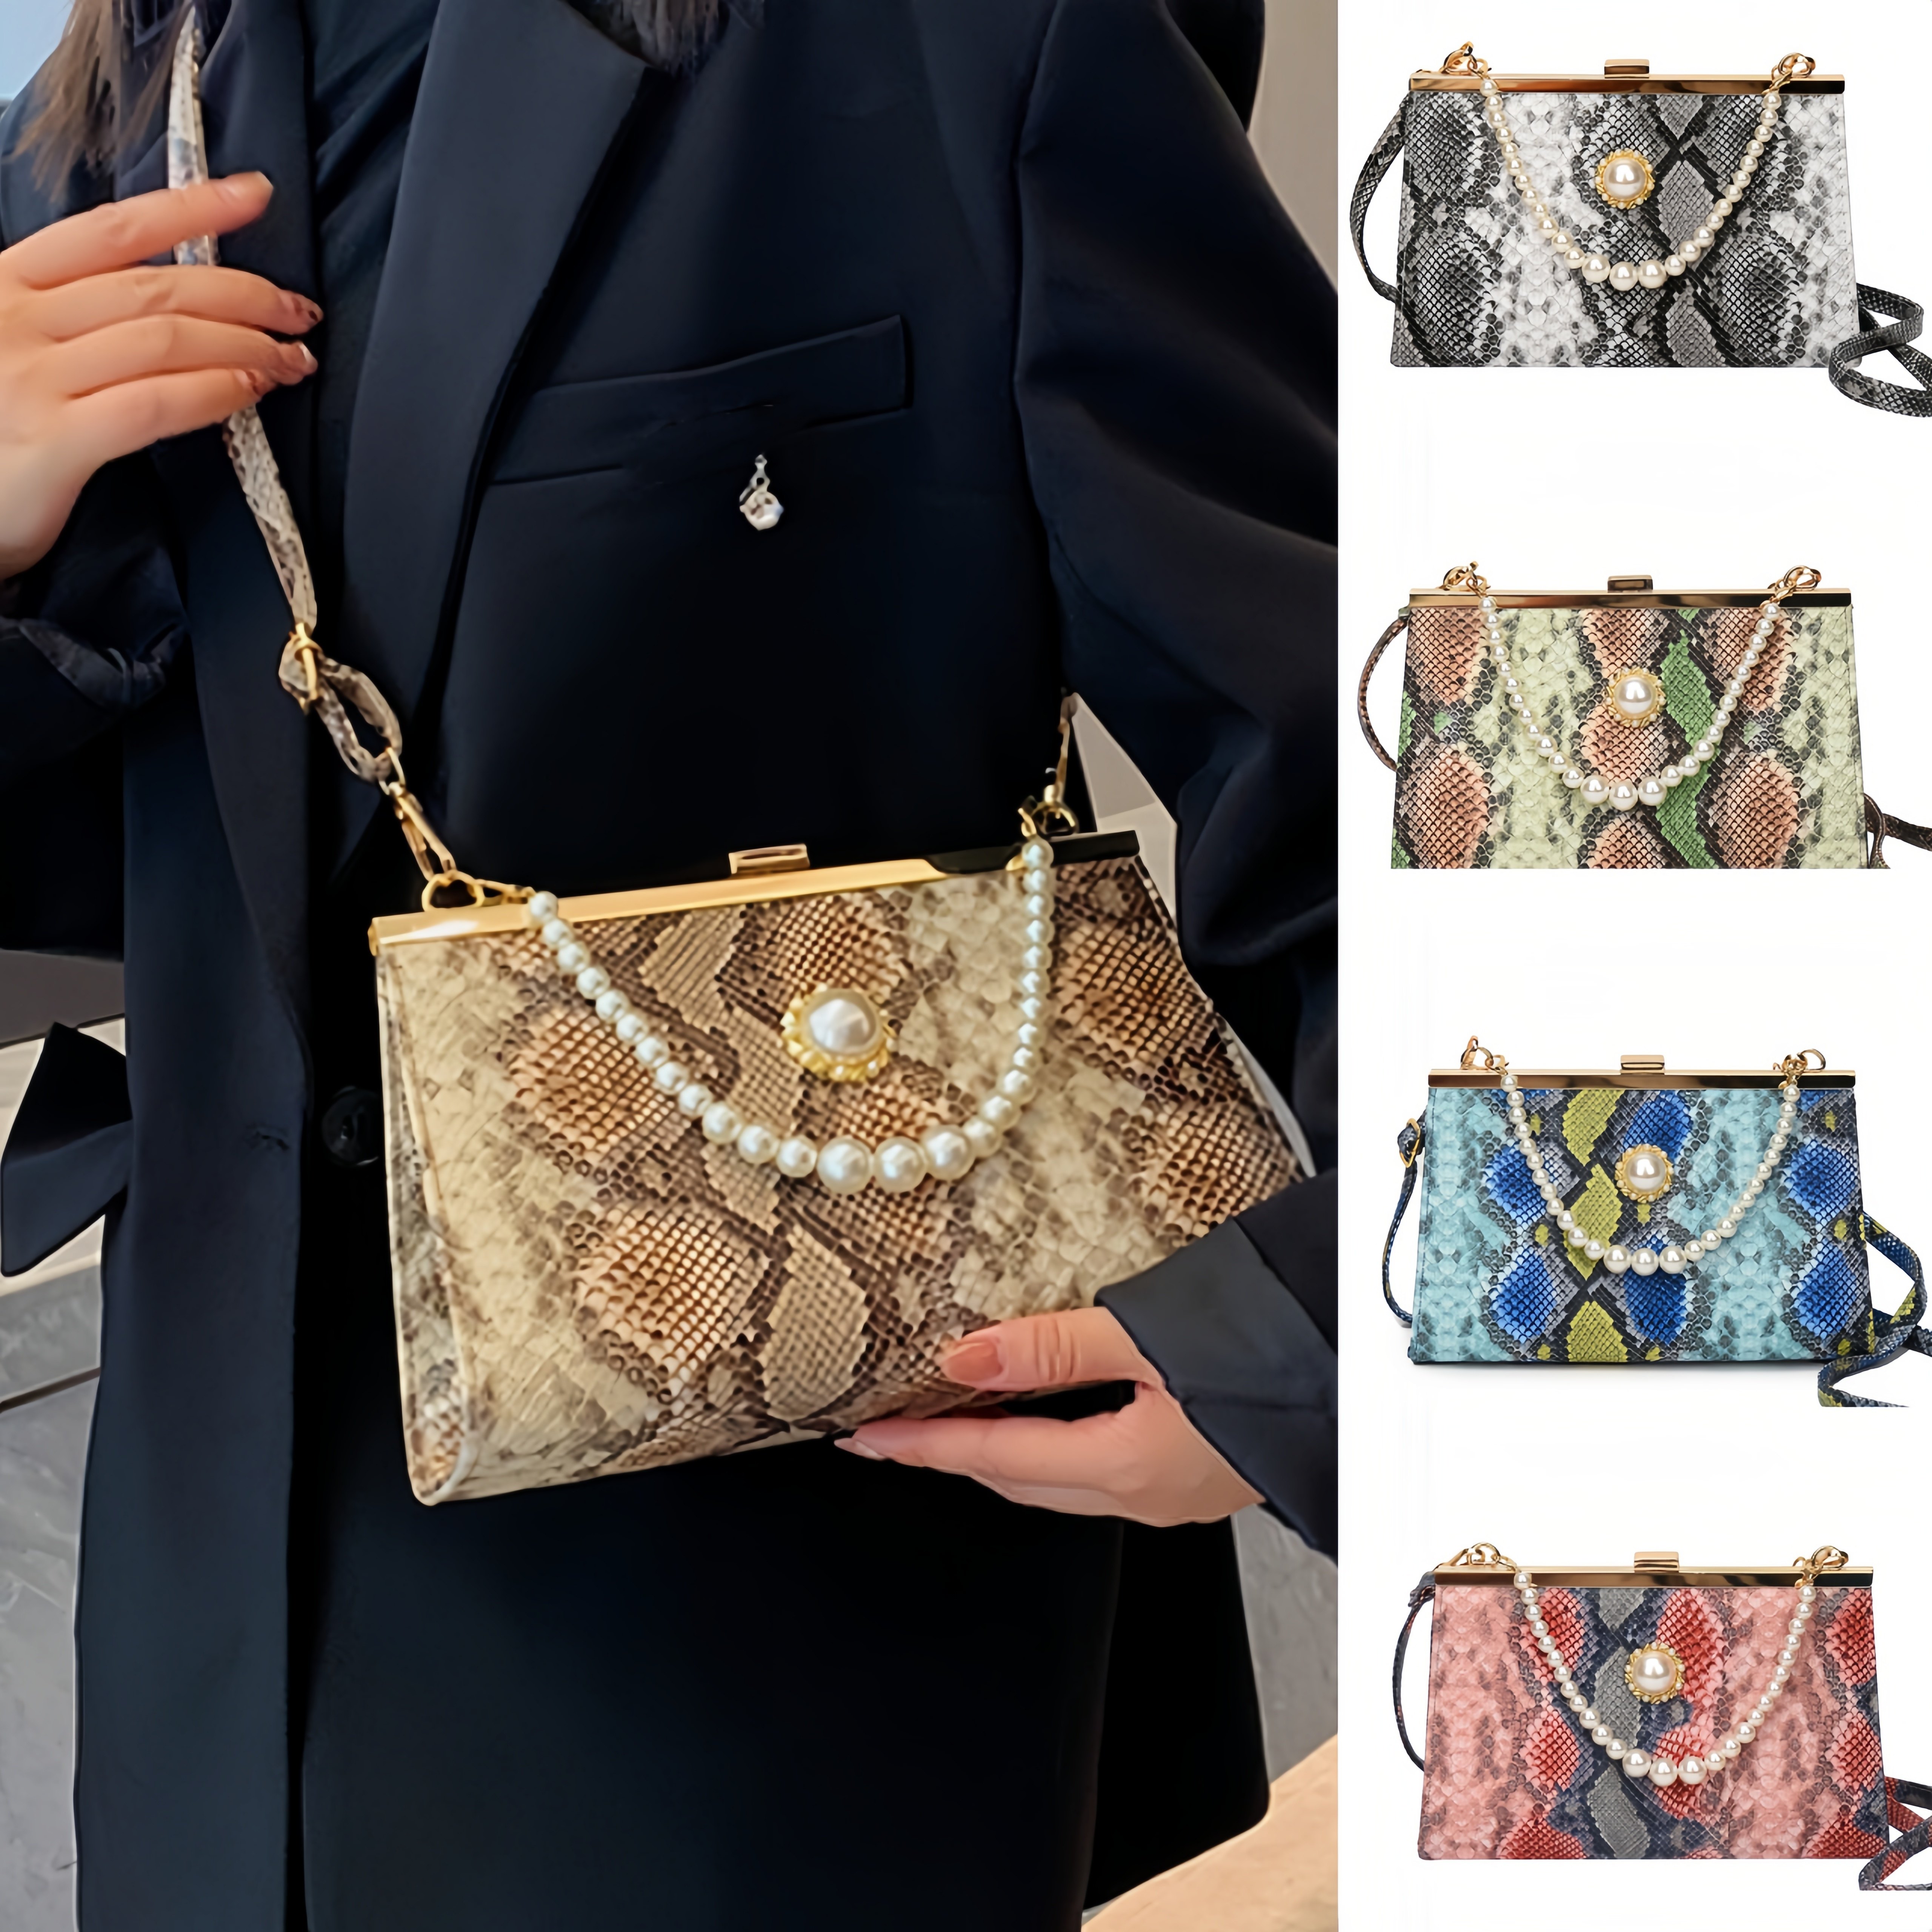 Leather Shoulder Bag Chain Purse for Women - Fashion Crossbody Bags Vintage  Snake Print Underarm Bag Square Satchel Handbag